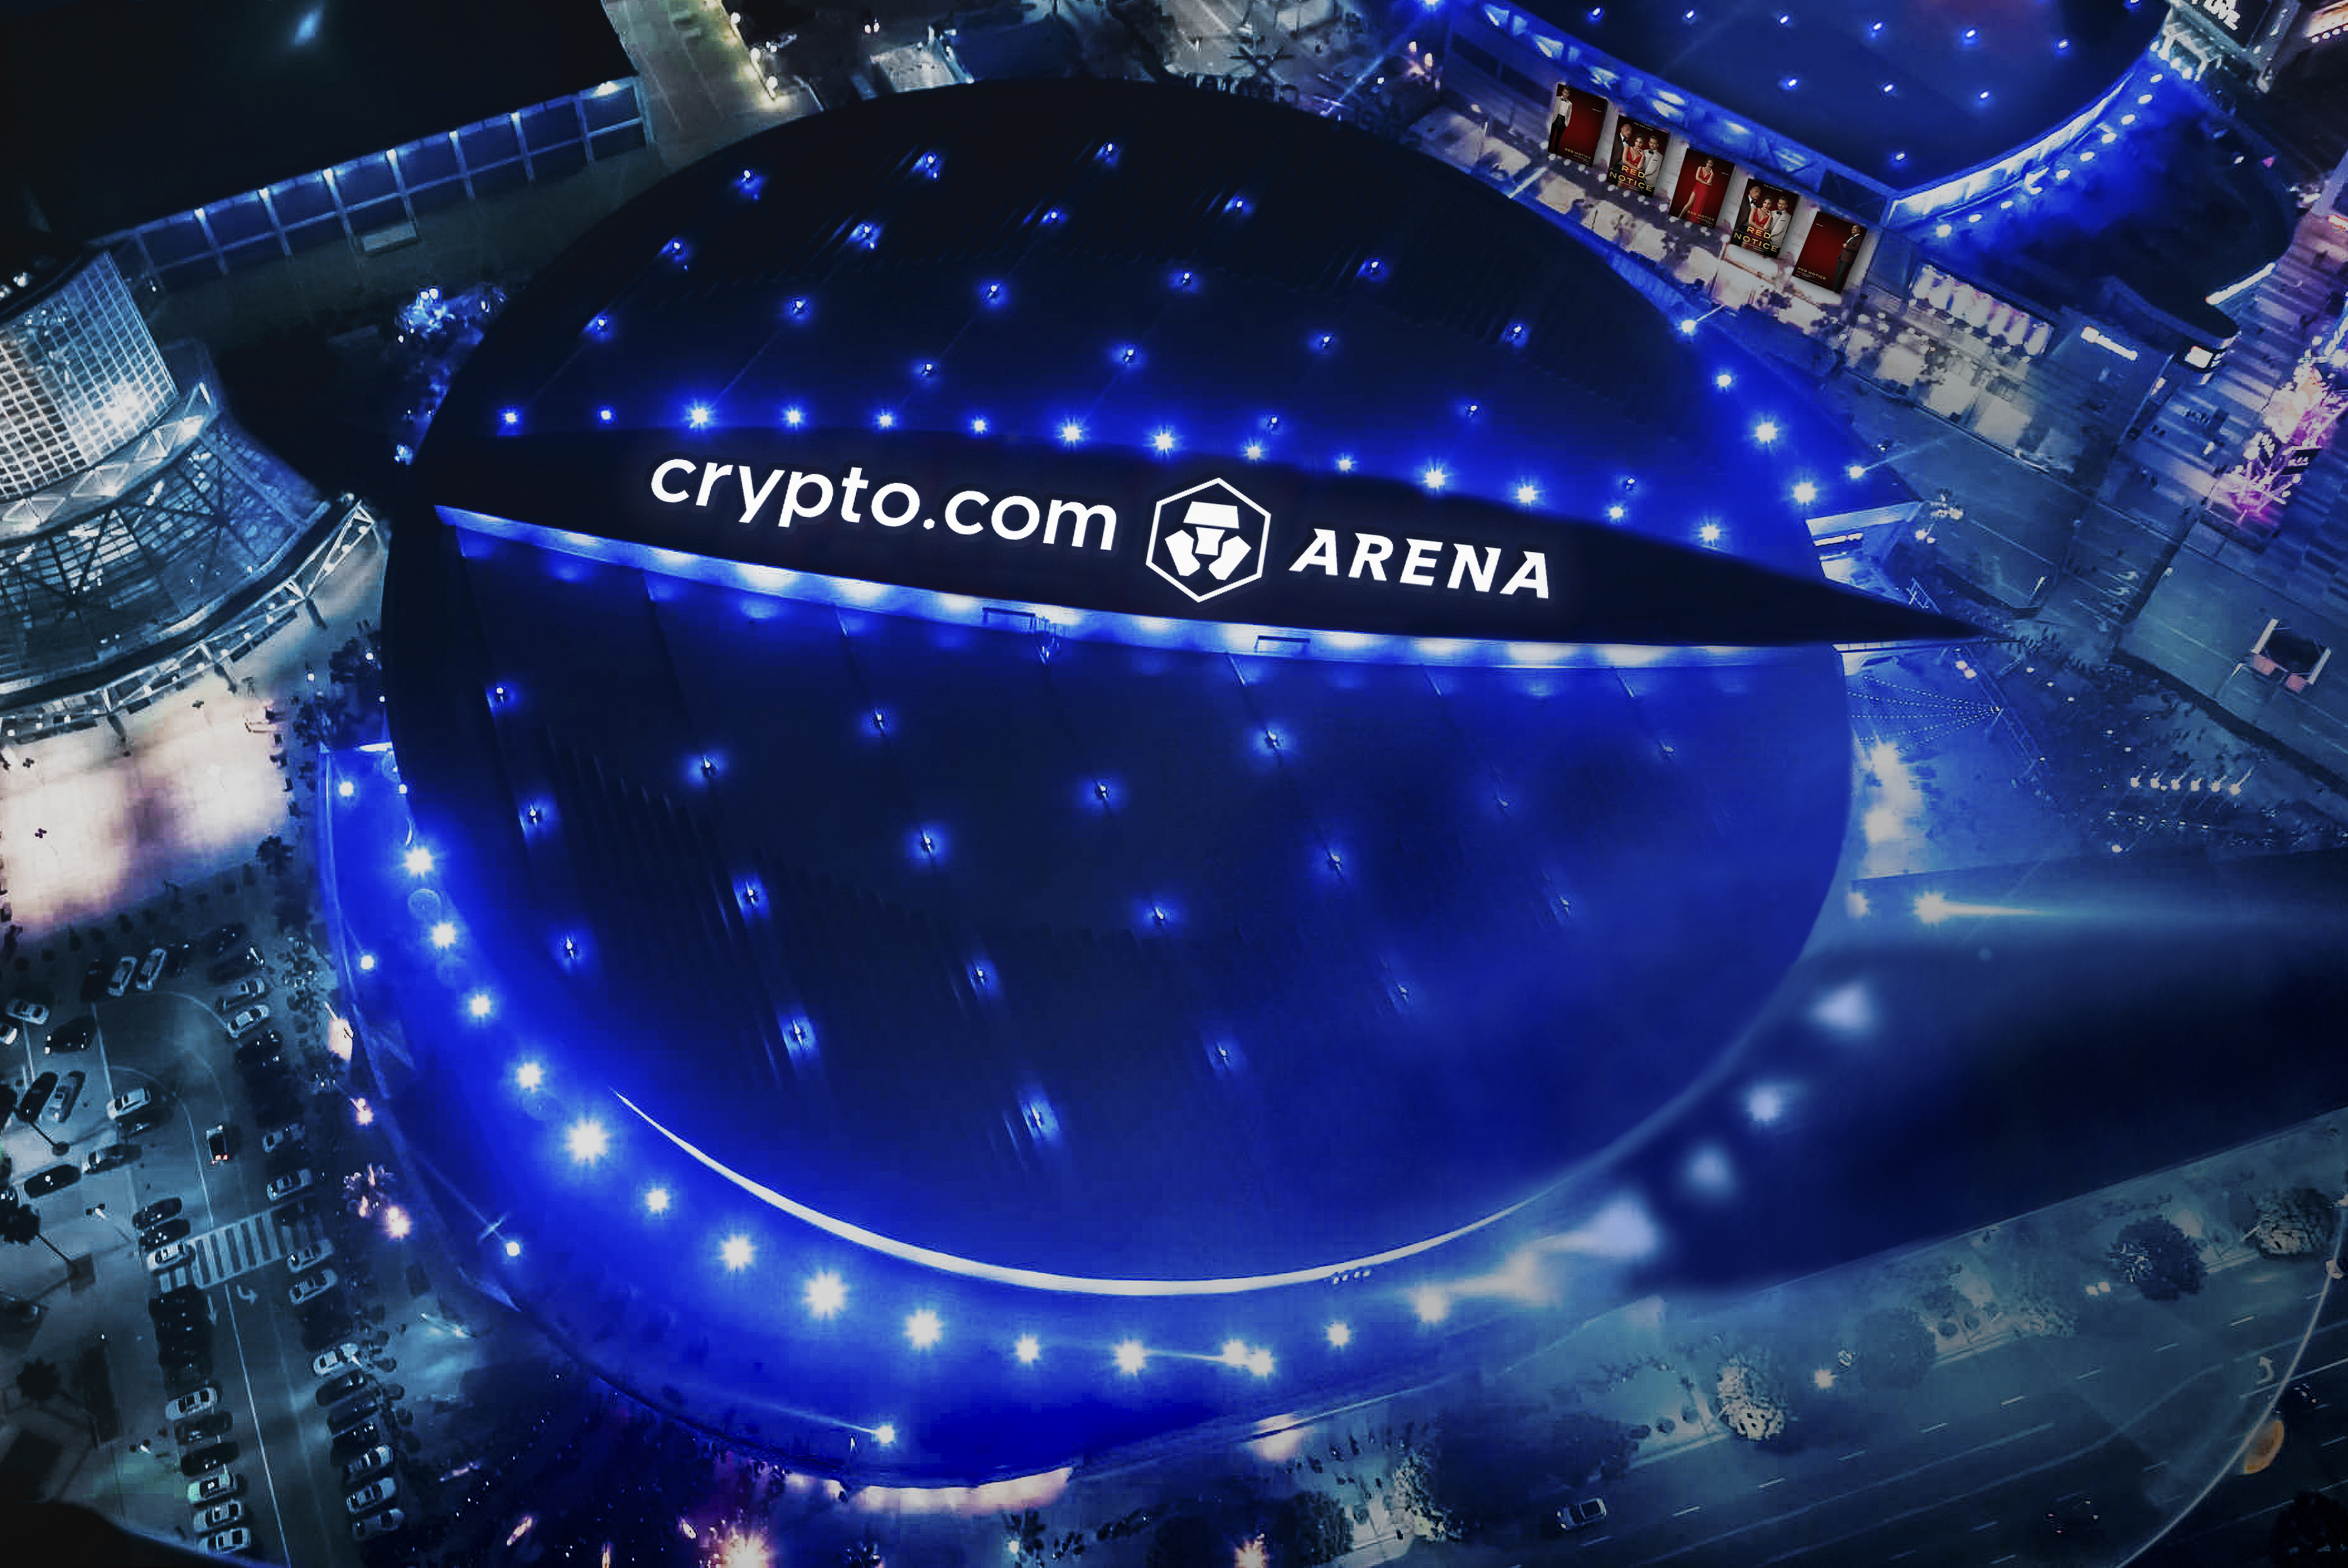 LA's Staples Center to Be Renamed Crypto.com Arena